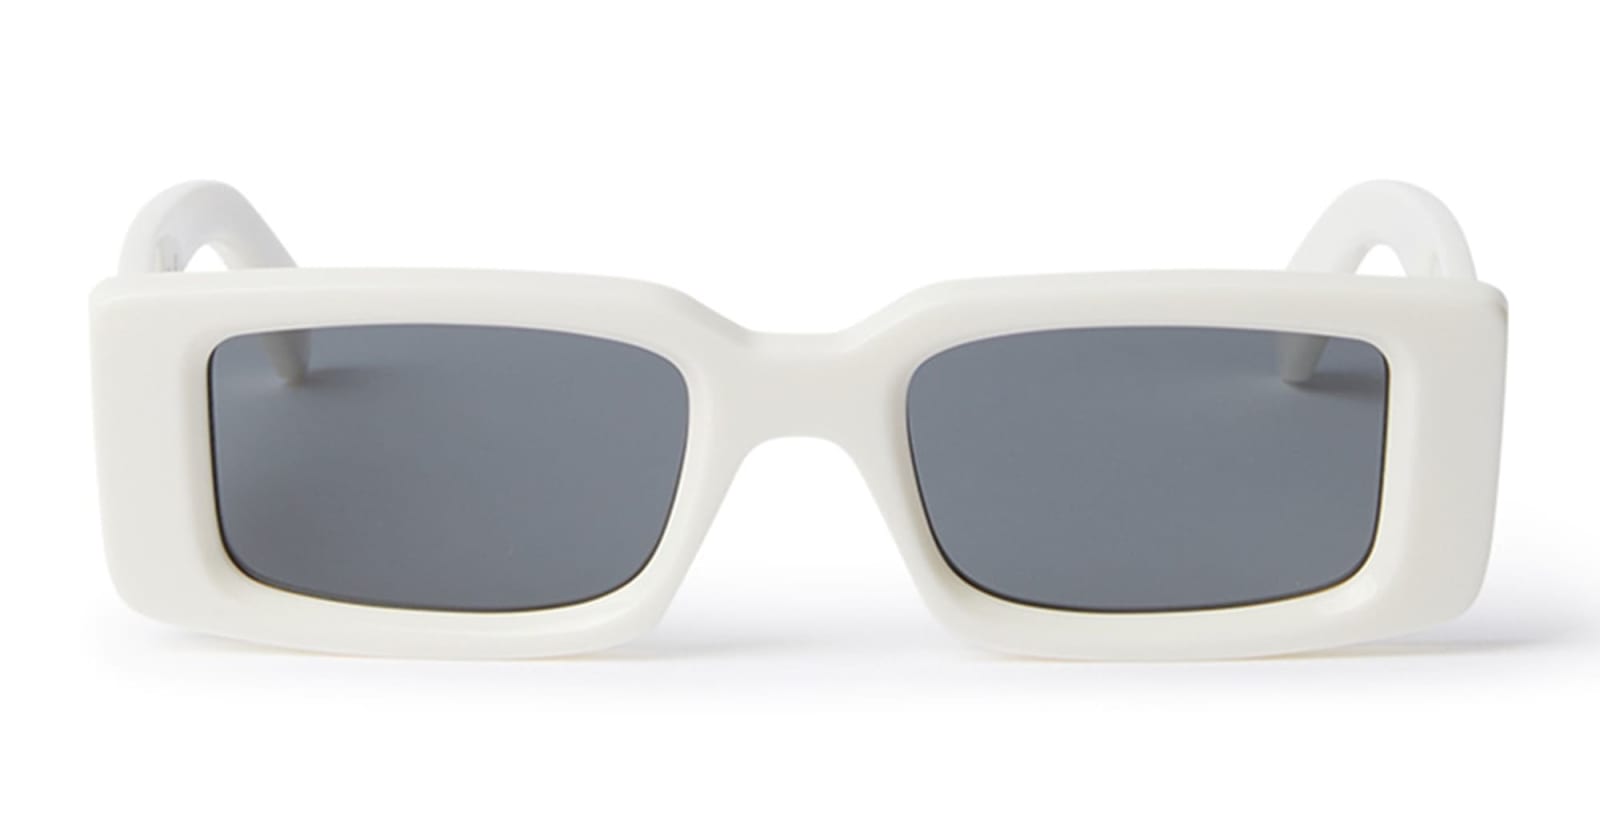 Off-white Arthur - White / Dark Grey Sunglasses